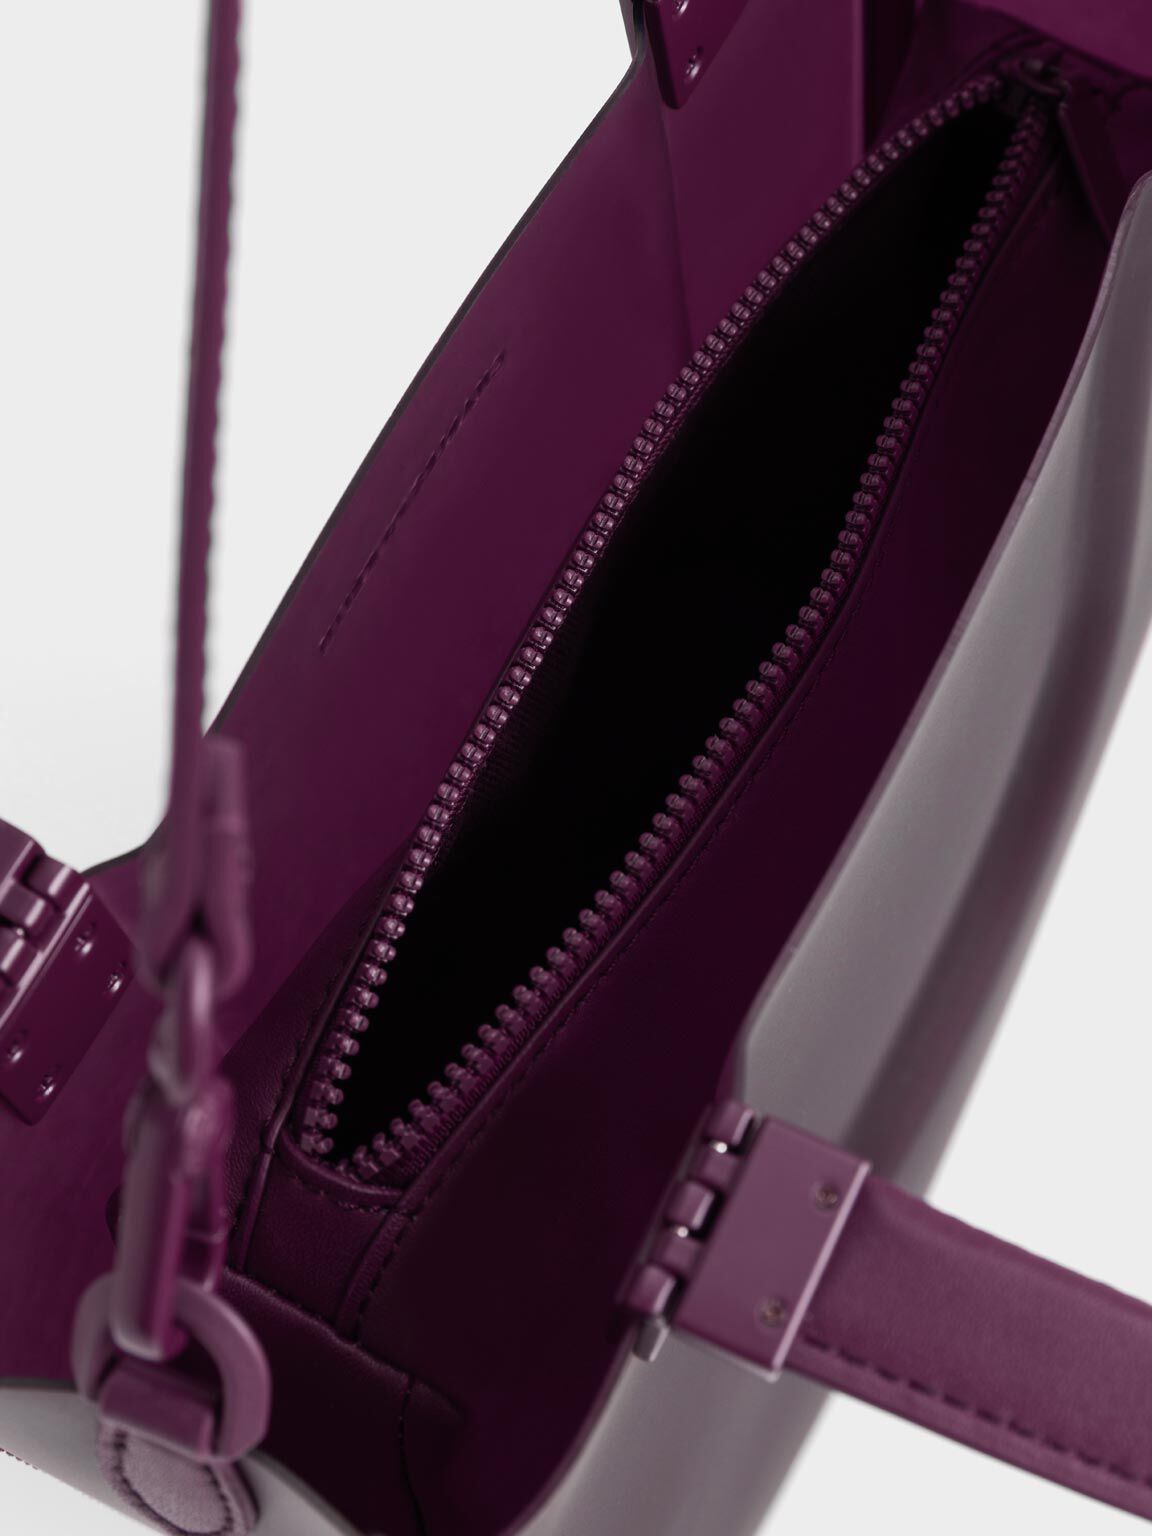 Curved Tote Bag, Purple, hi-res